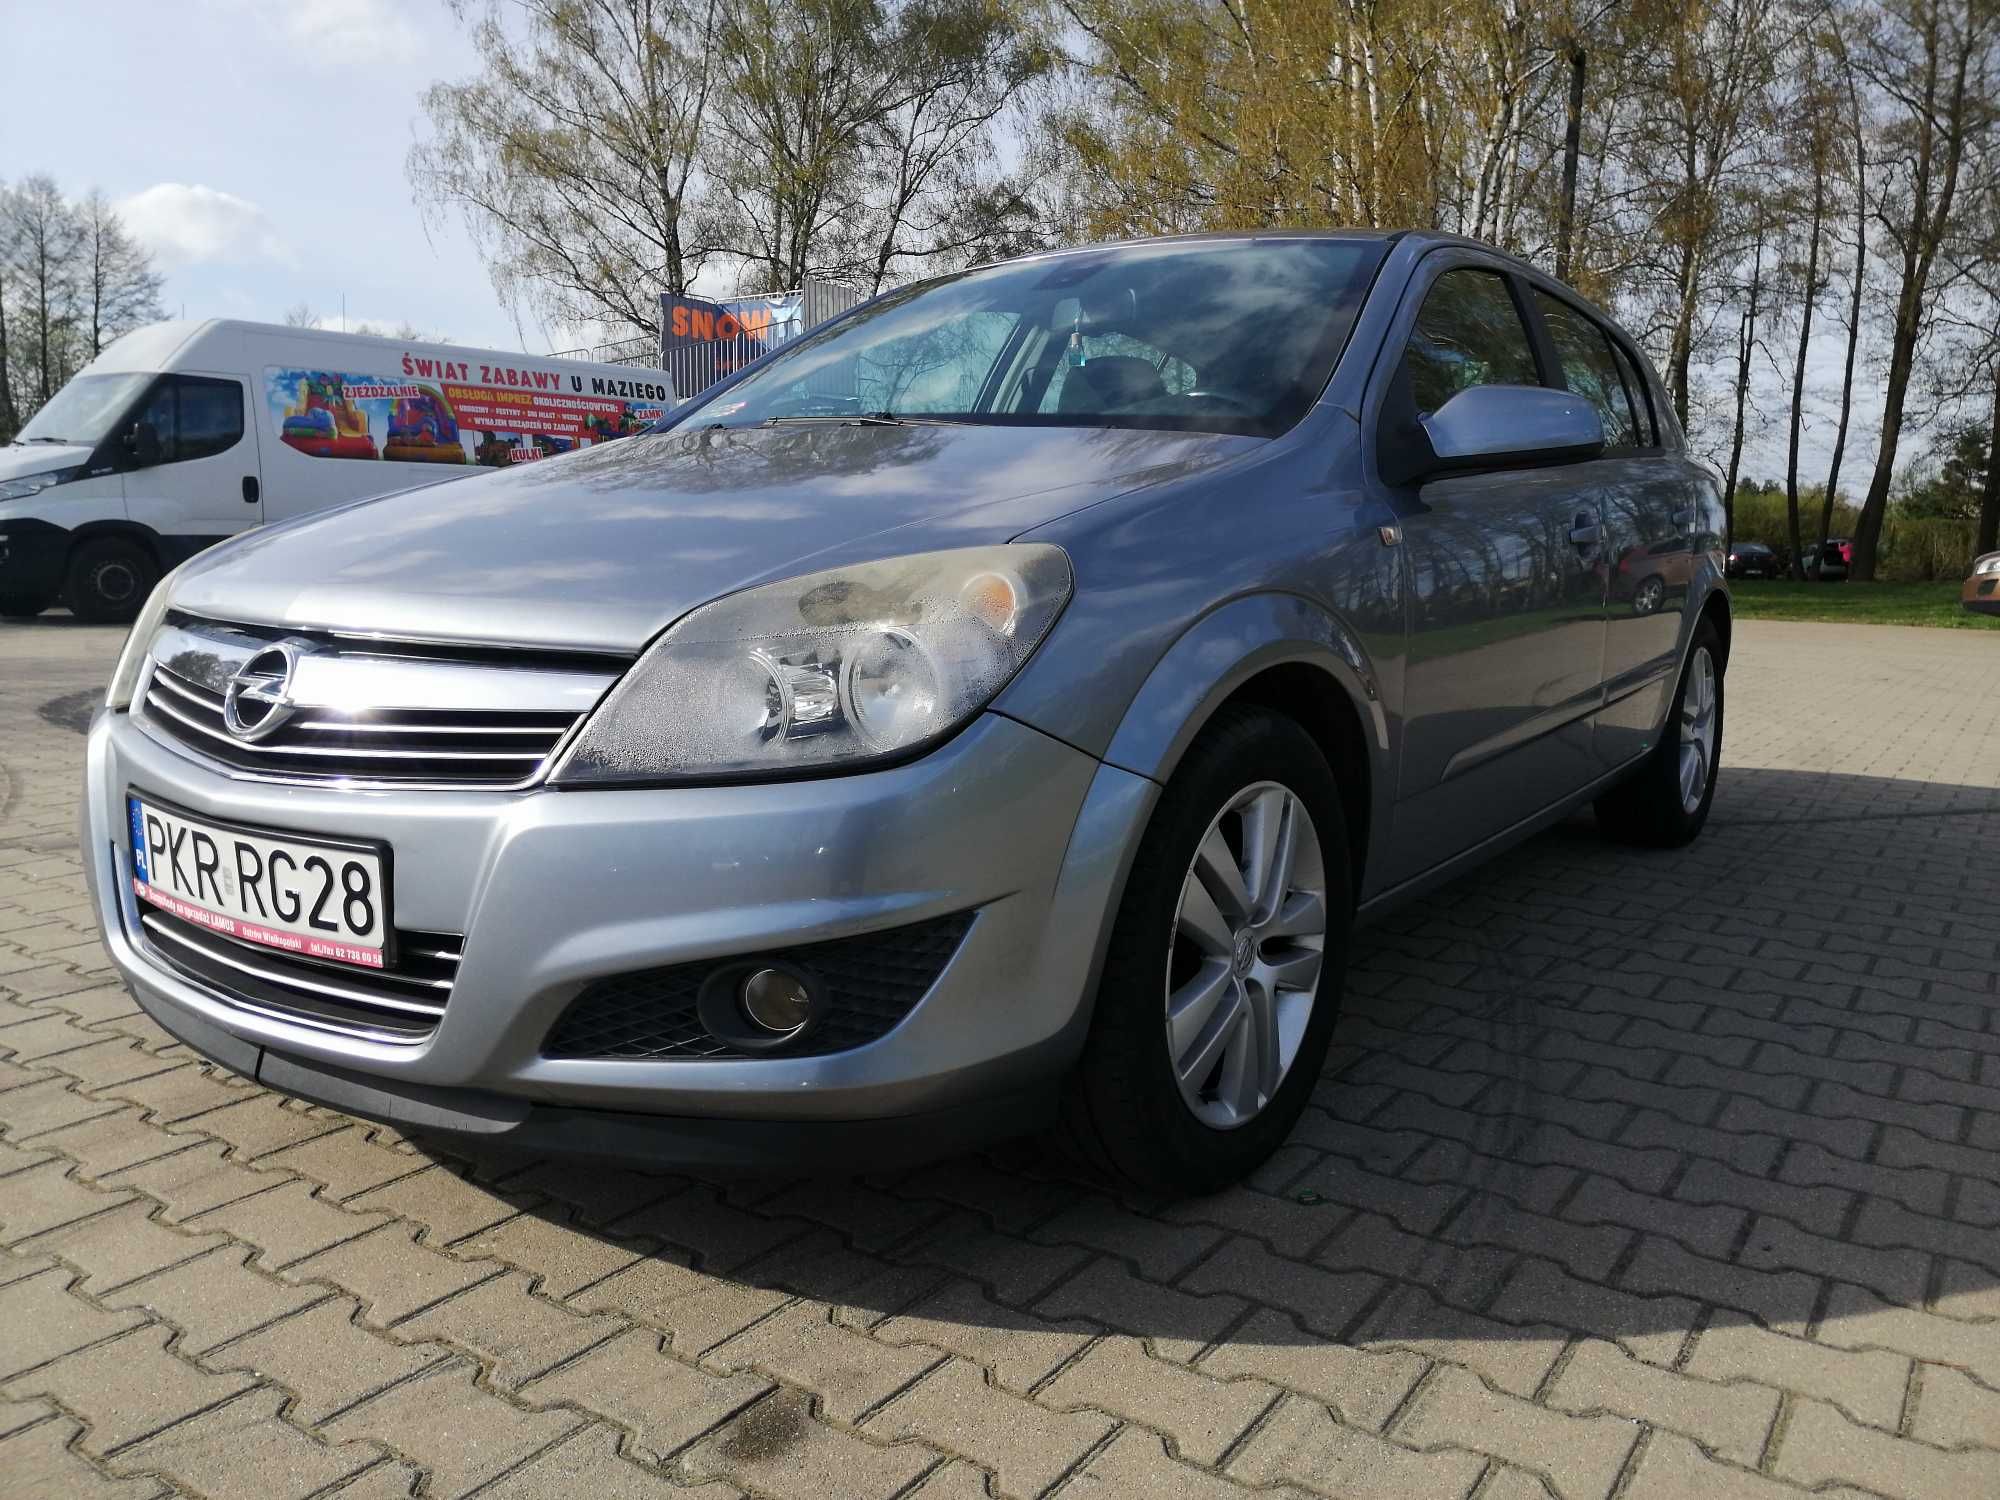 Opel ASTRA 1.7 CDTI  2008 rok.